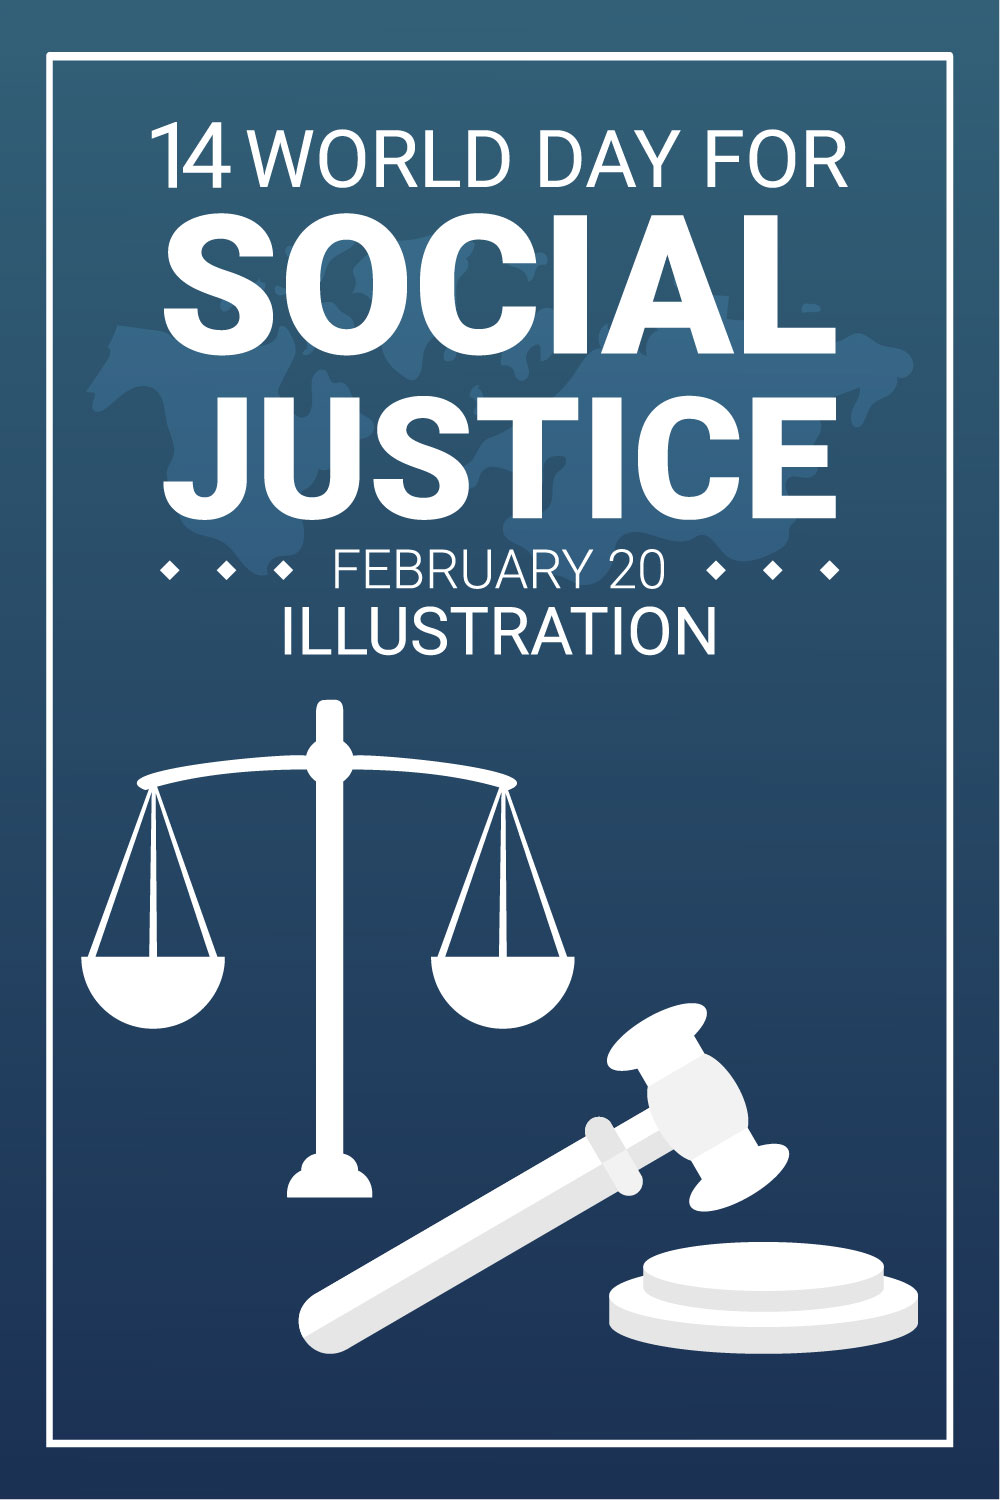 World Day of Social Justice Illustration pinterest image.